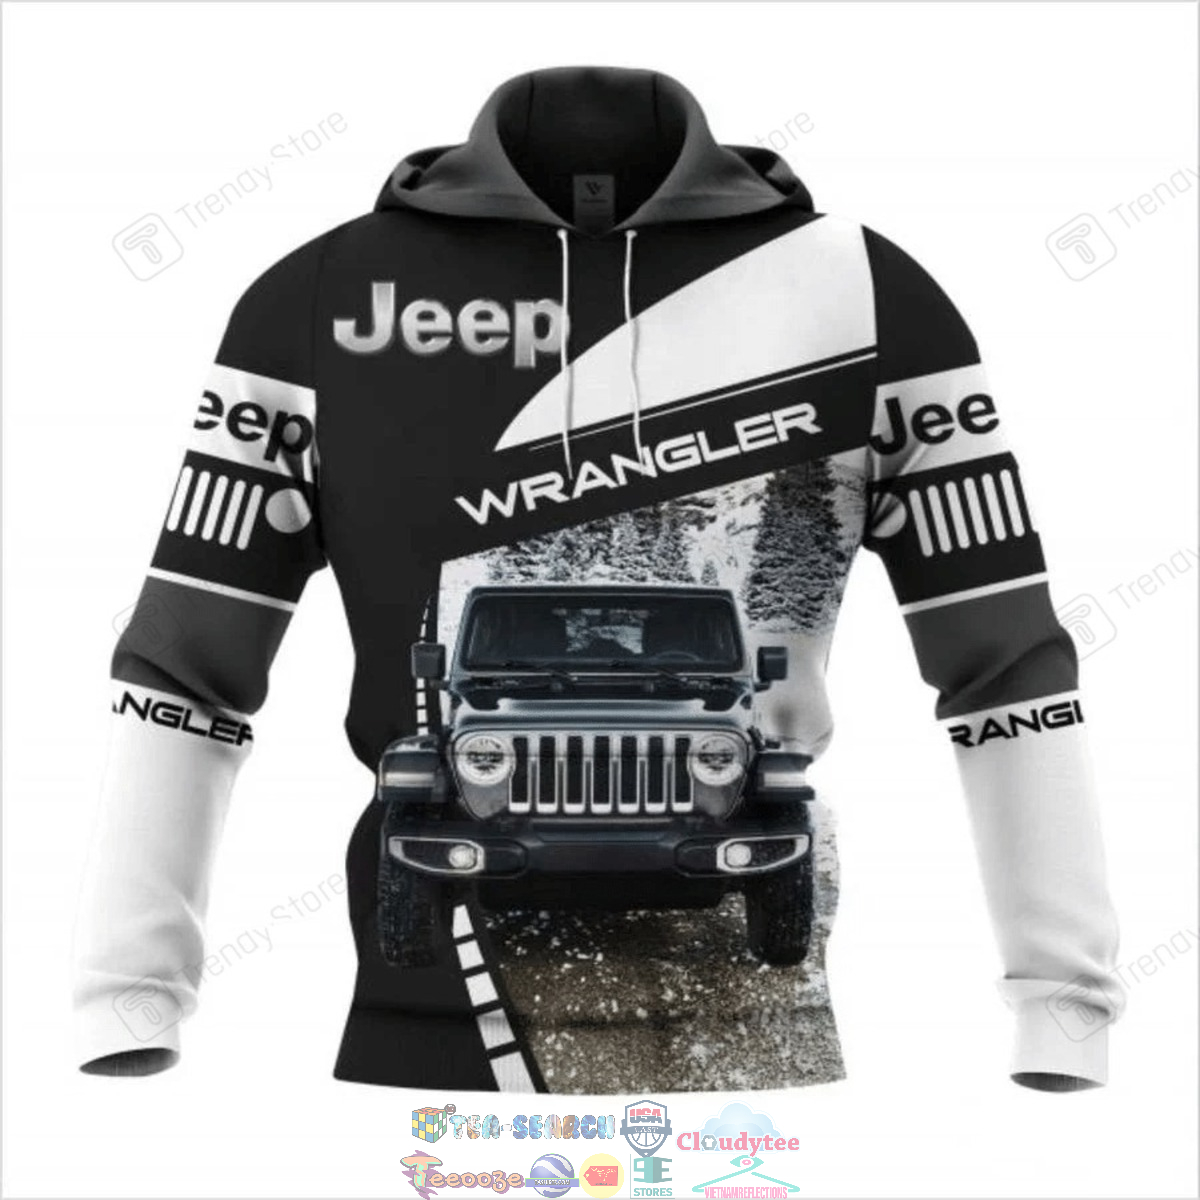 Jeep Wrangler ver 19 3D hoodie and t-shirt – Saleoff